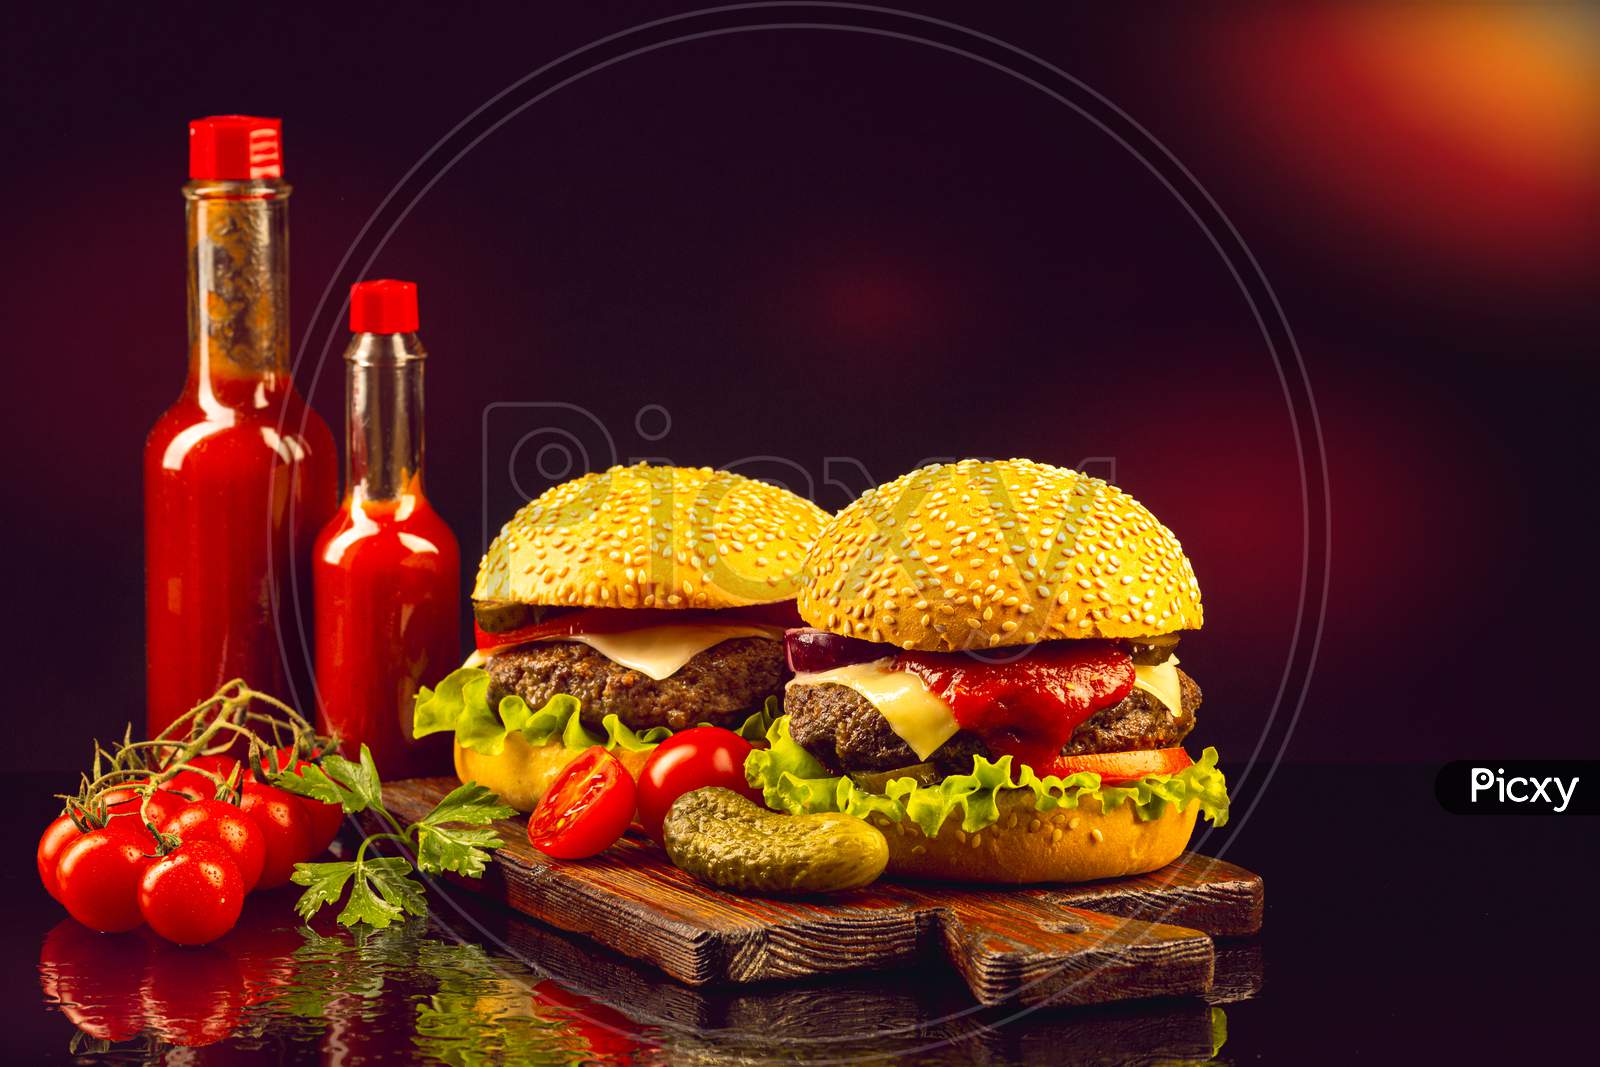 hamburger and french fries with ketchup